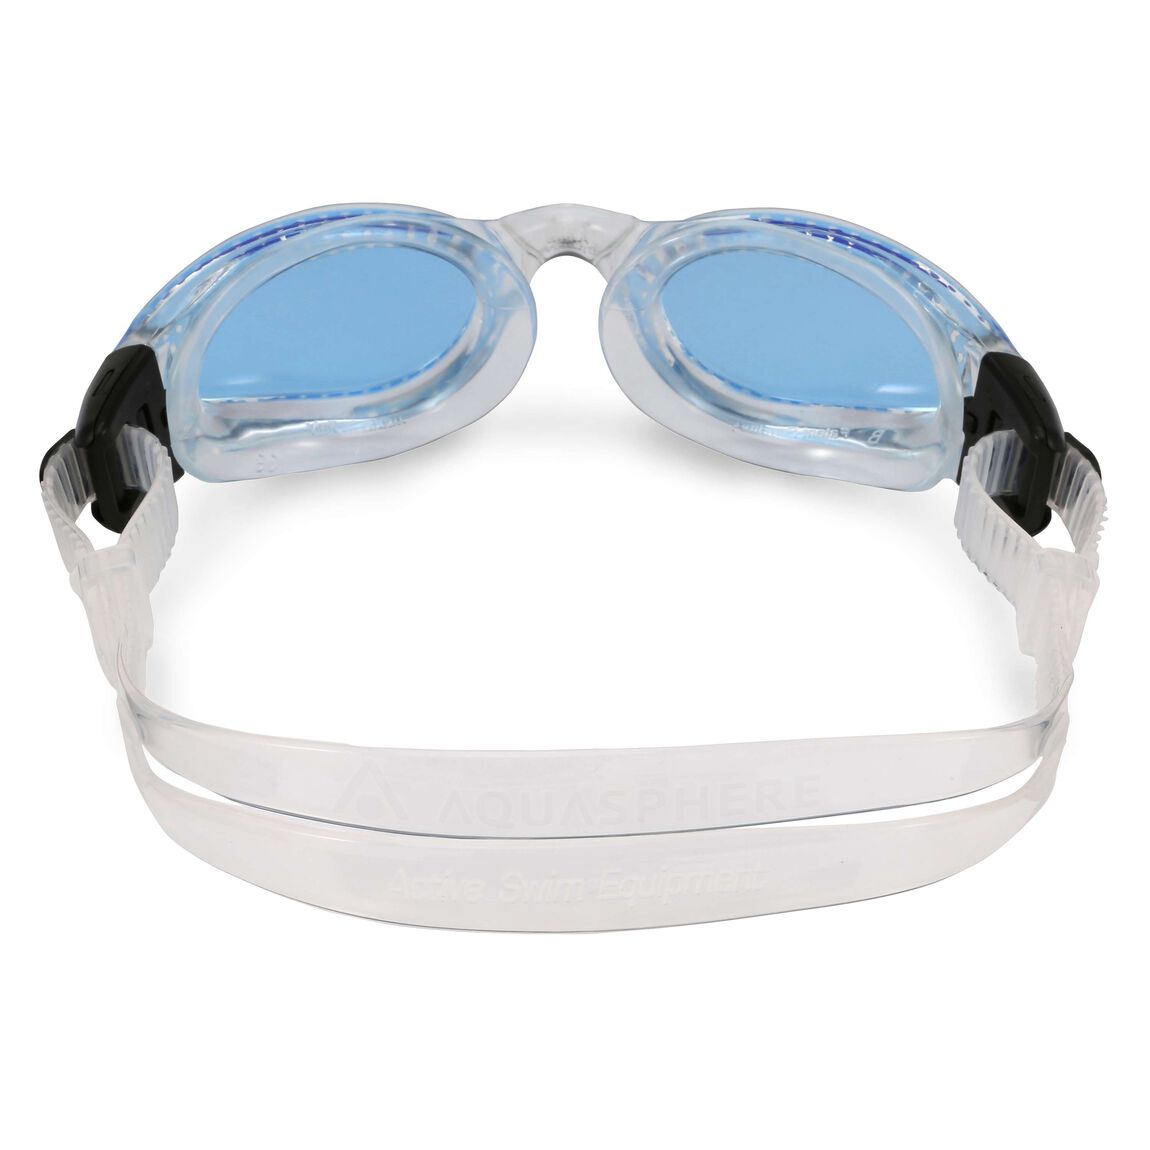 Aquasphere Kaiman Swim Goggles - Transparent/Blue Tint